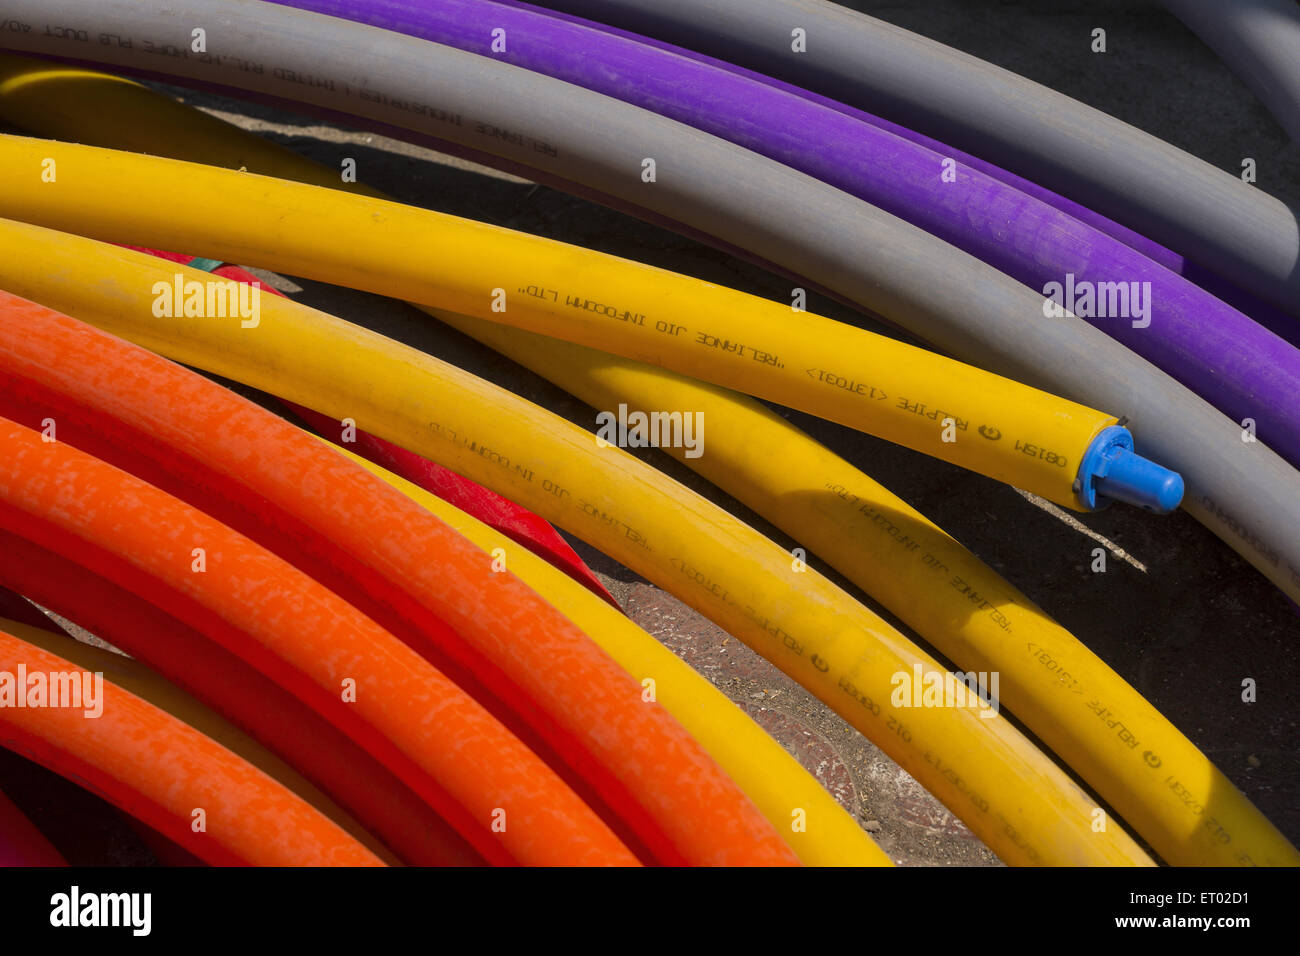 Reliance 4G Netzwerk Multi Color PVC Rohre Indien Asien Stockfoto